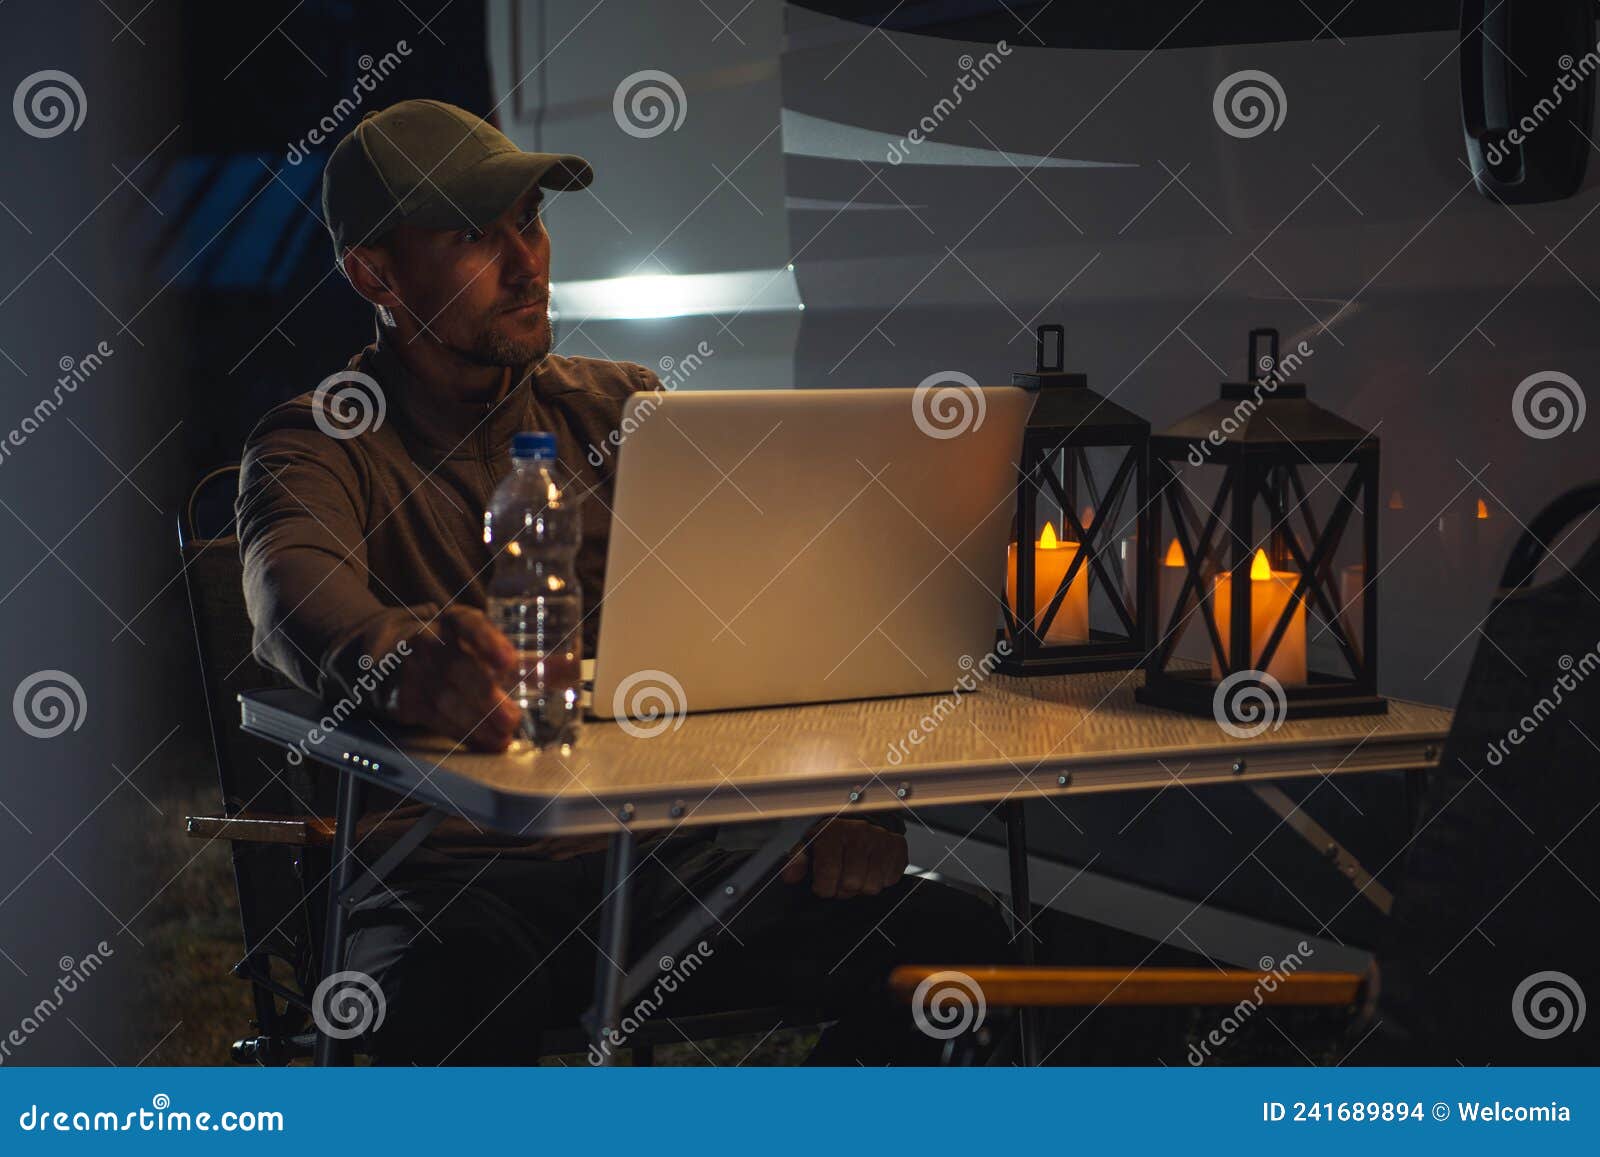 caucasian men working remotely next to his rv motorhome